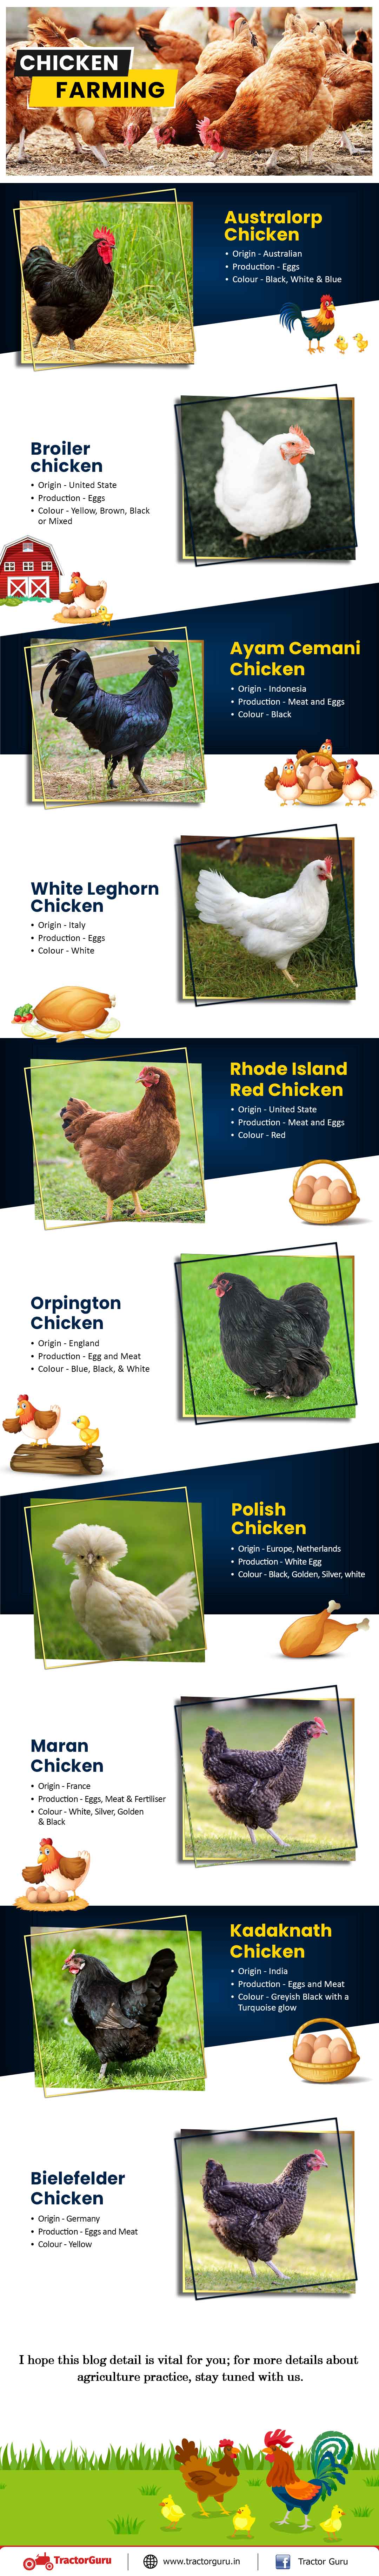 chicken farming - infographic